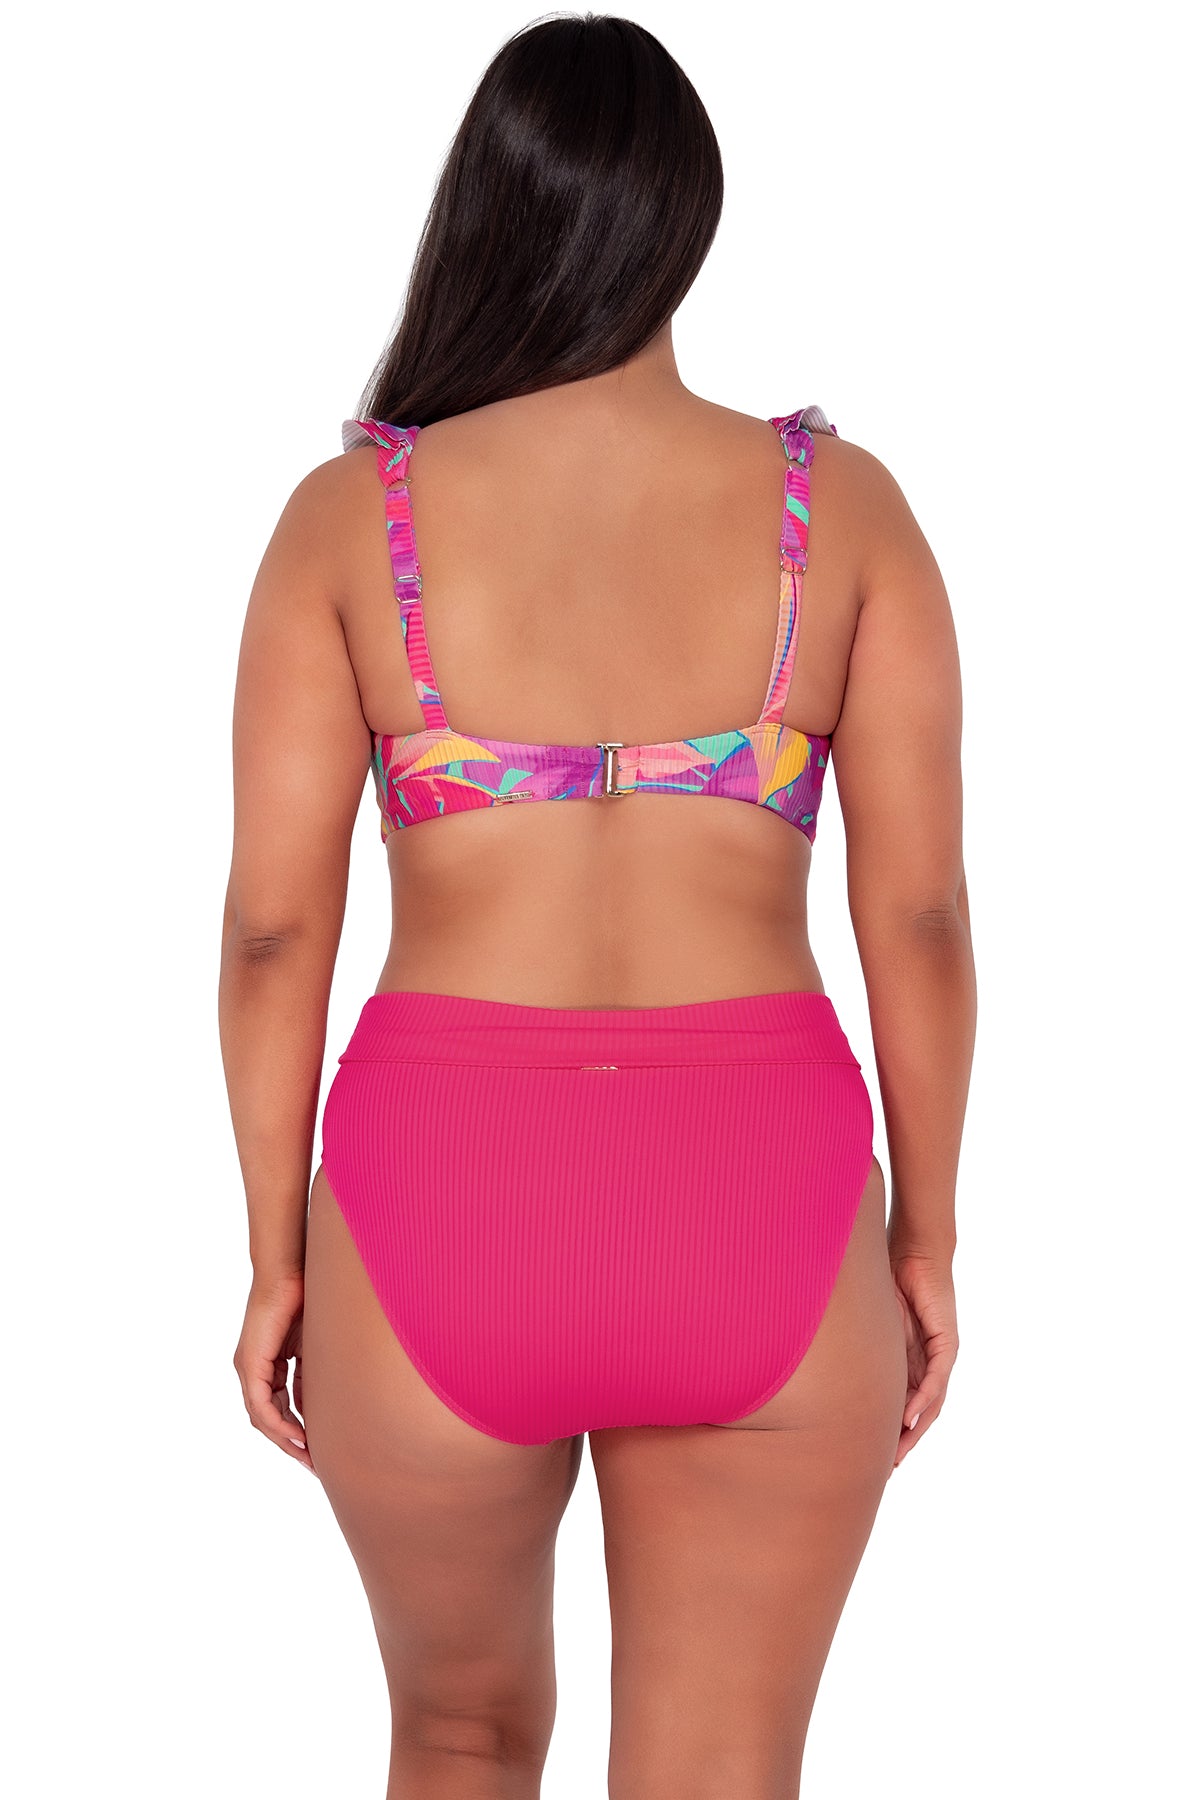 Back pose #1 of Nicki wearing Sunsets Oasis Sandbar Rib Willa Wireless Top paired with Hannah High Waist bikini bottom showing folded waist